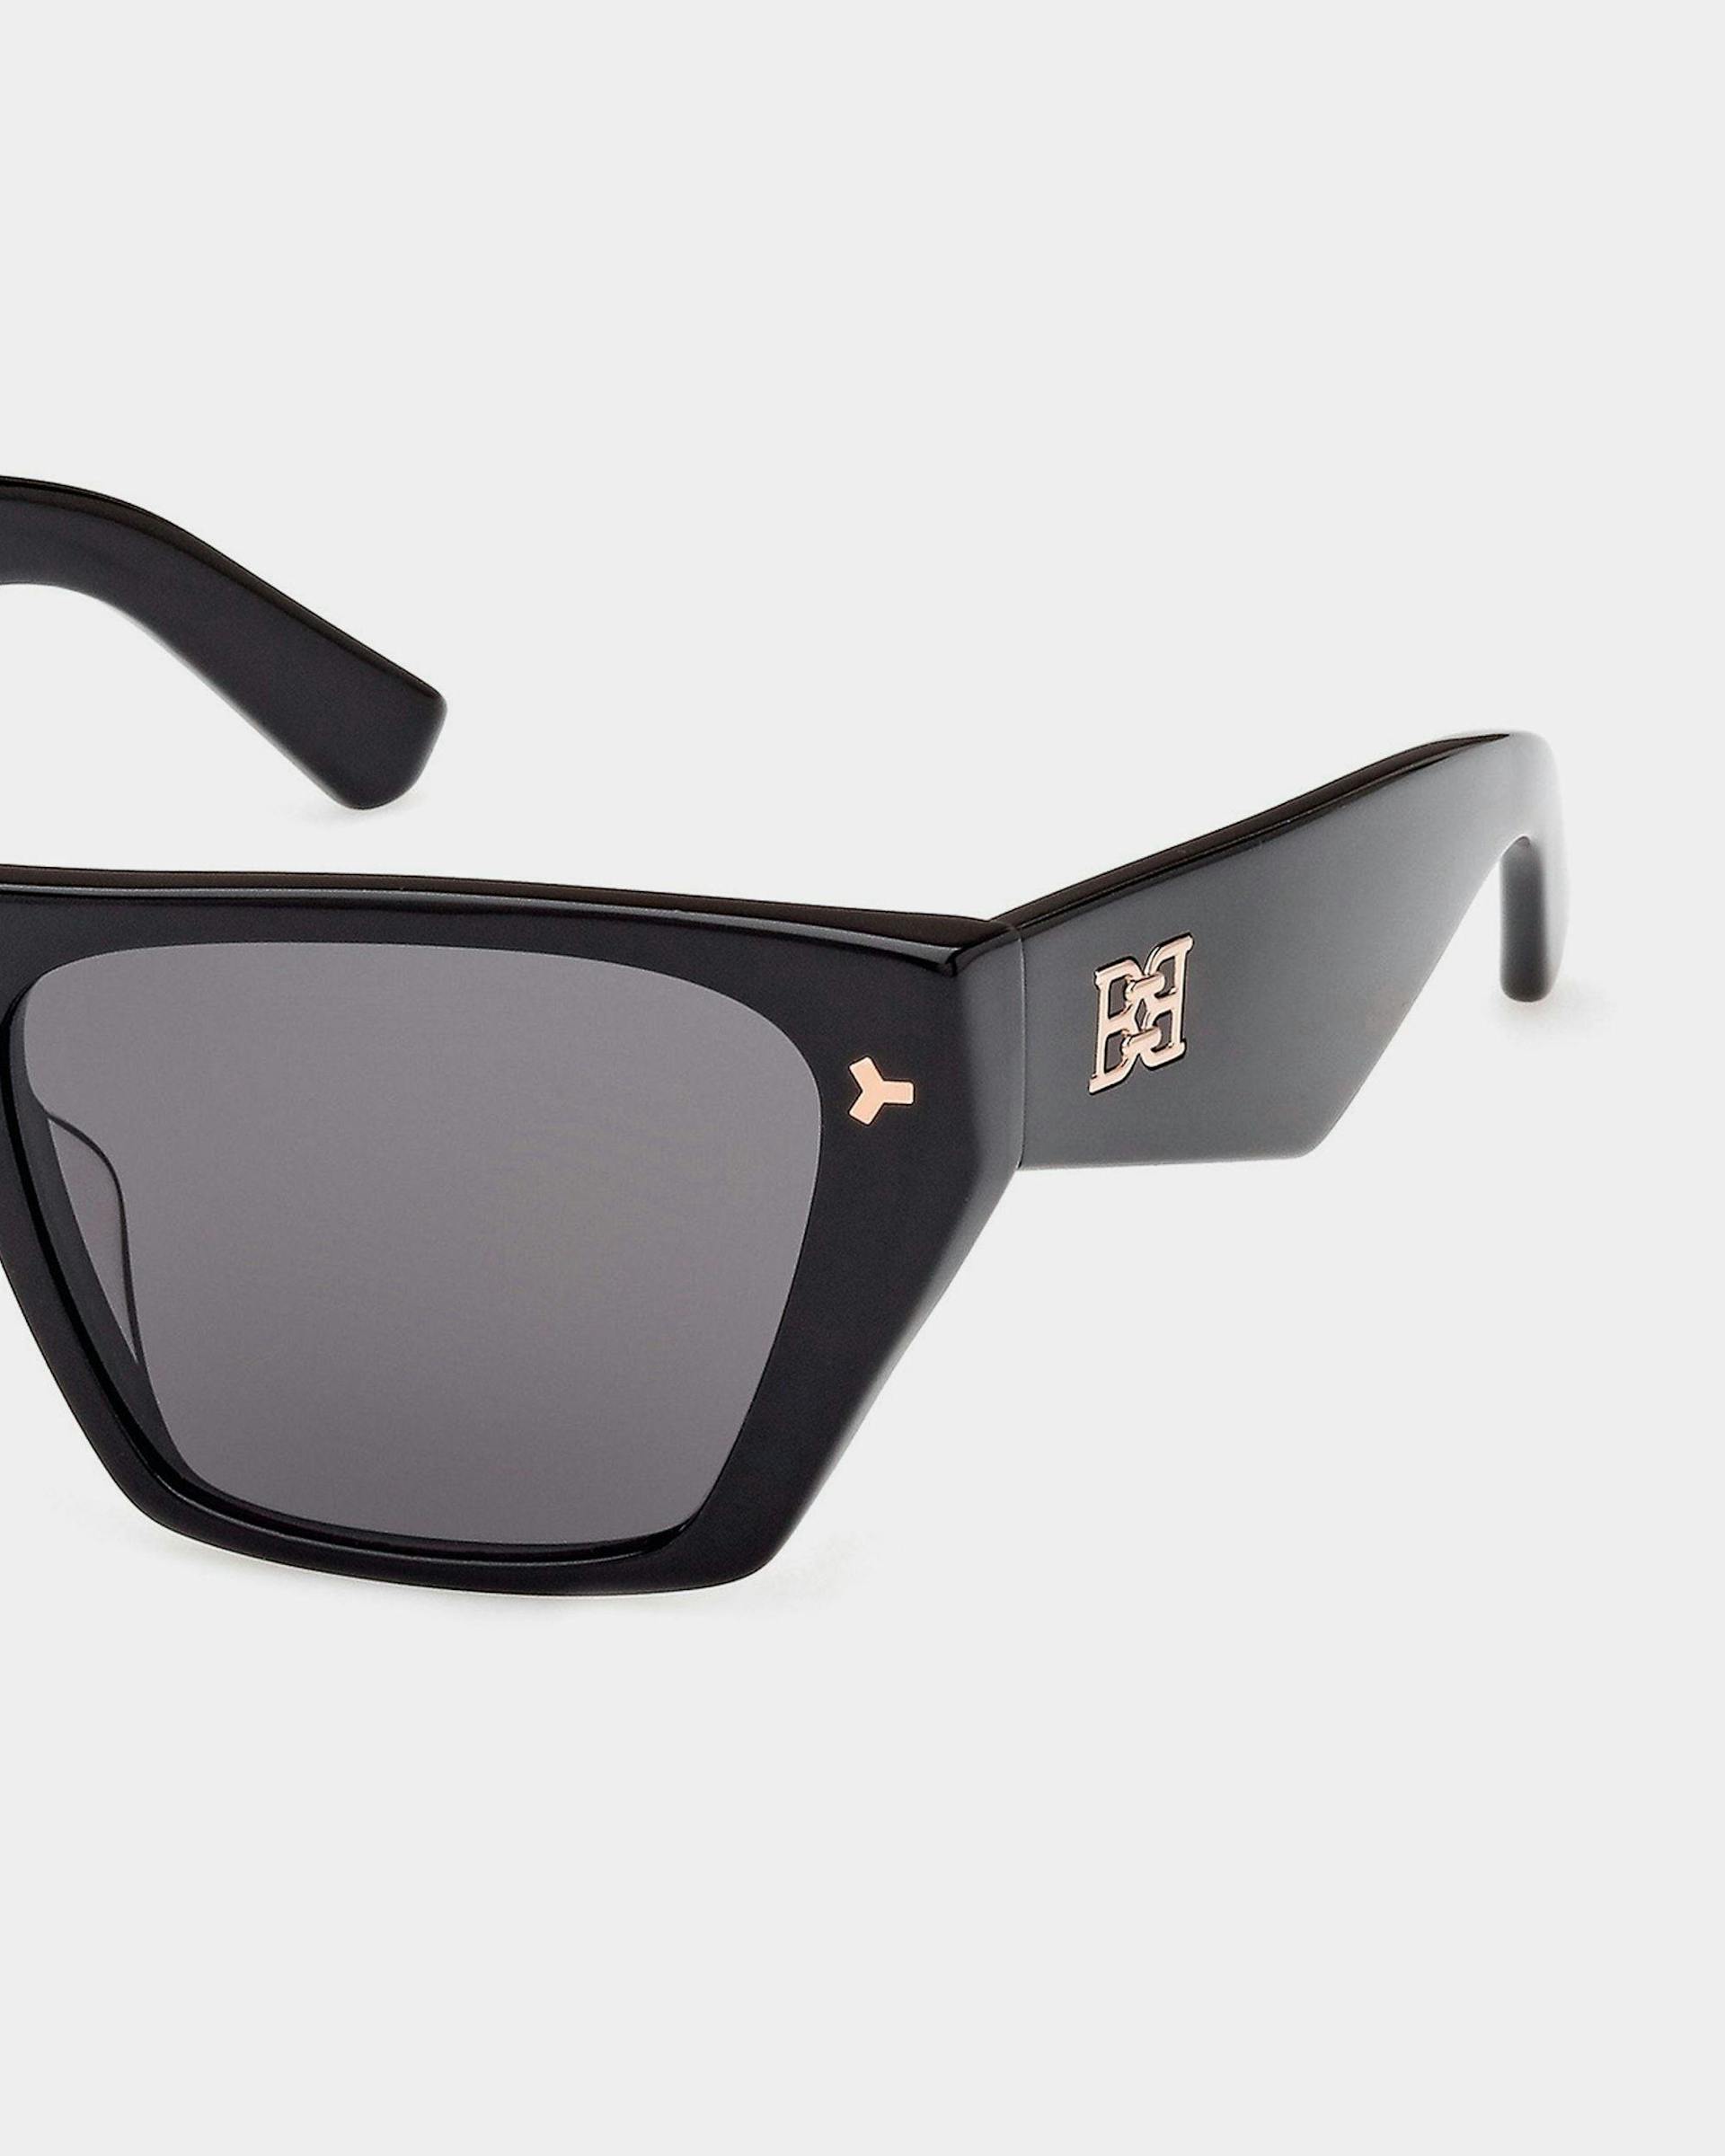 Ashley Geometric Full Rim Sunglasses In Black Plastic - Women's - Bally - 03